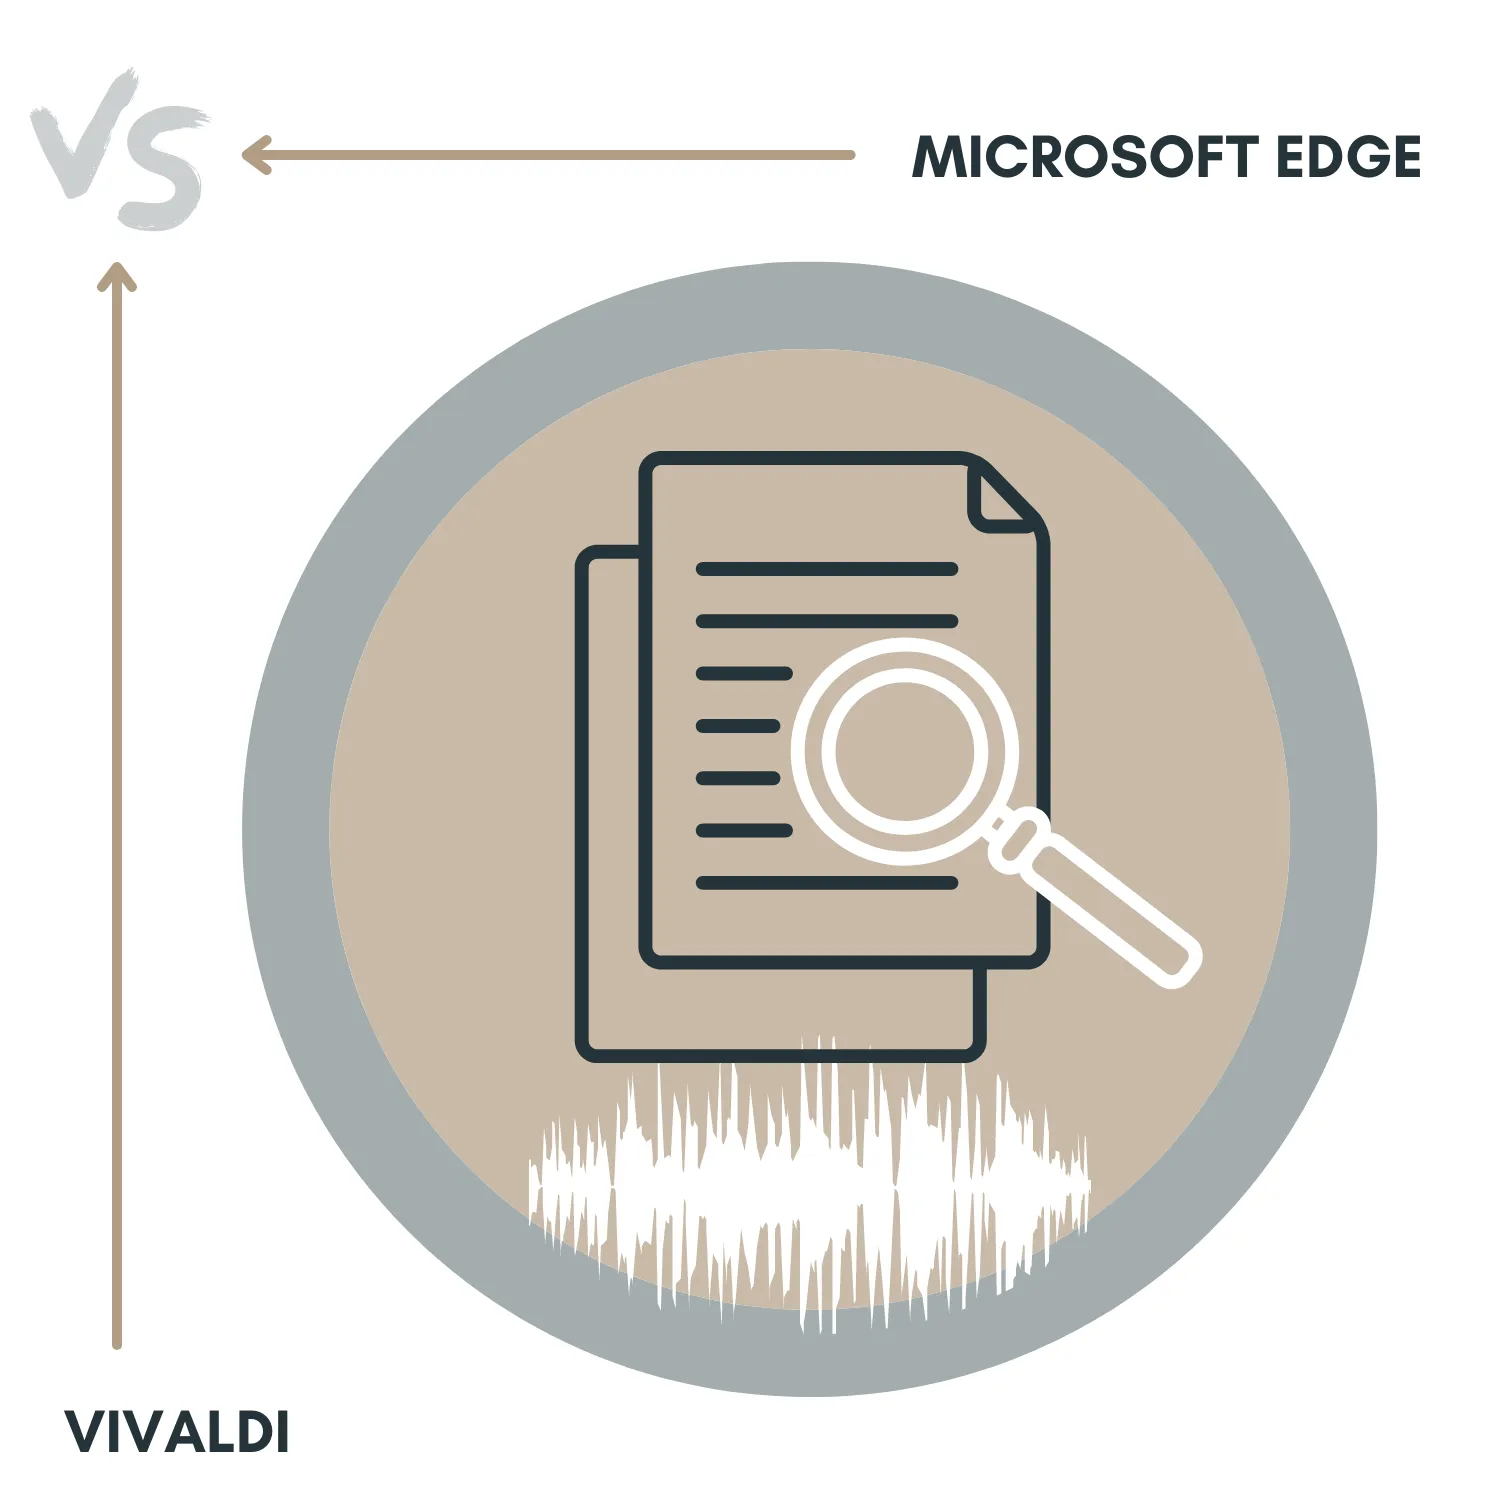 Microsoft Edge vs. Vivaldi